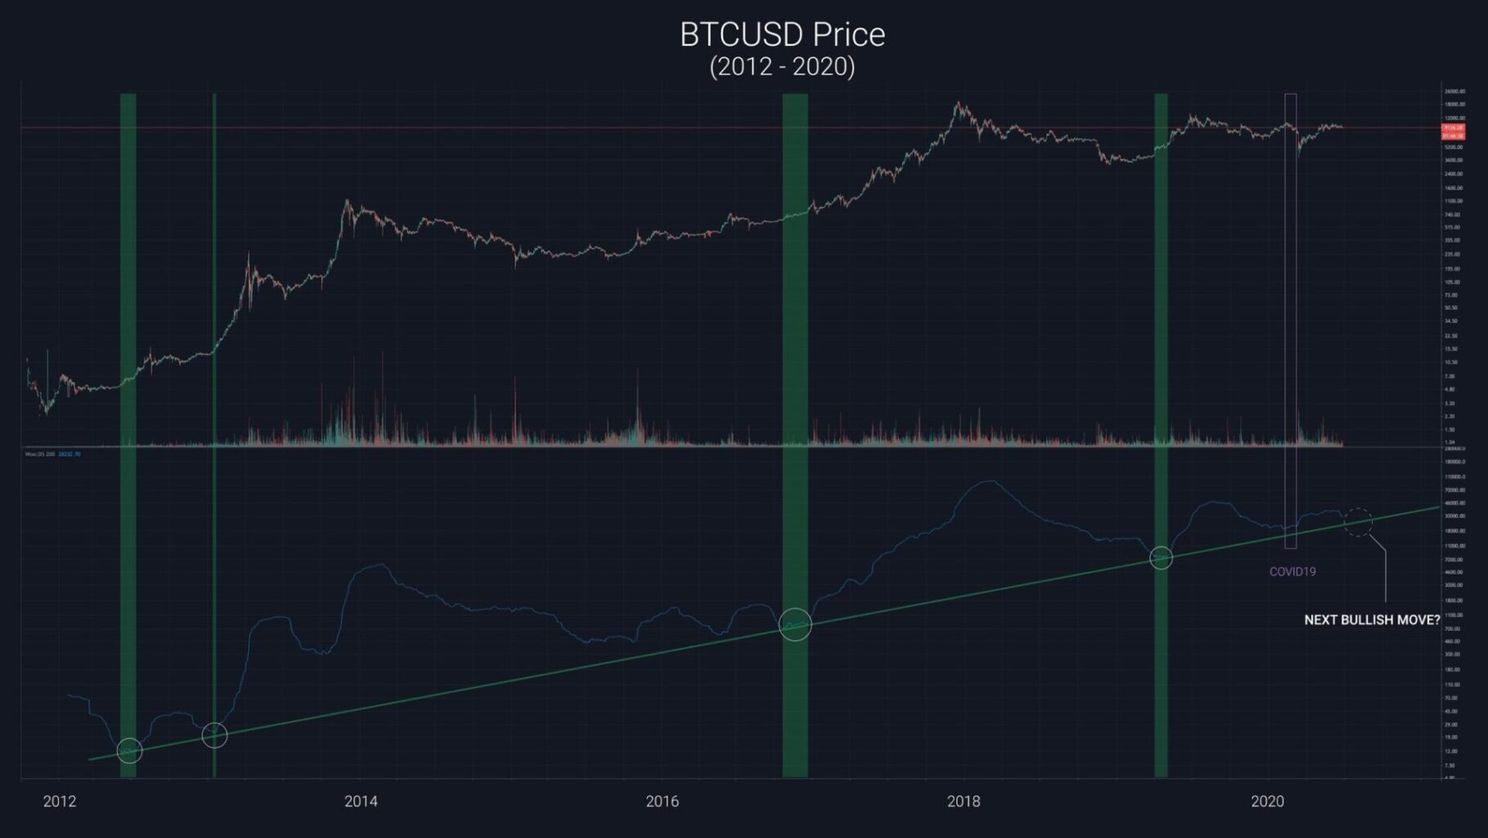 PrimeXBT: Hoe ziet de Bitcoin (BTC) markt eruit na COVID-19?